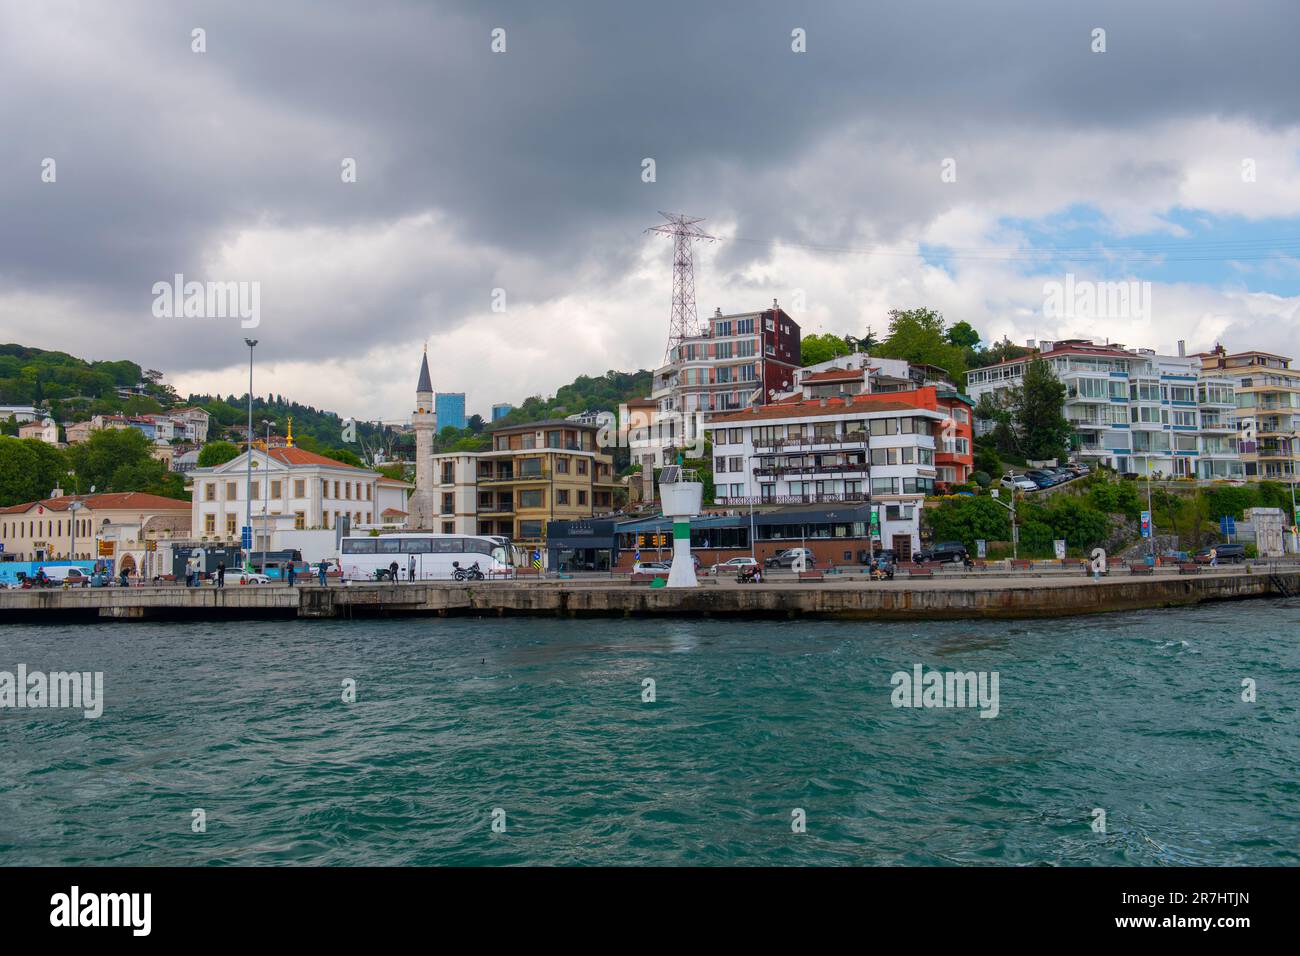 Arnavutkoy village historic waterfront commercial buildings at Bosporus strait waterside at Besiktas district in historic city of Istanbul, Turkey. Stock Photo